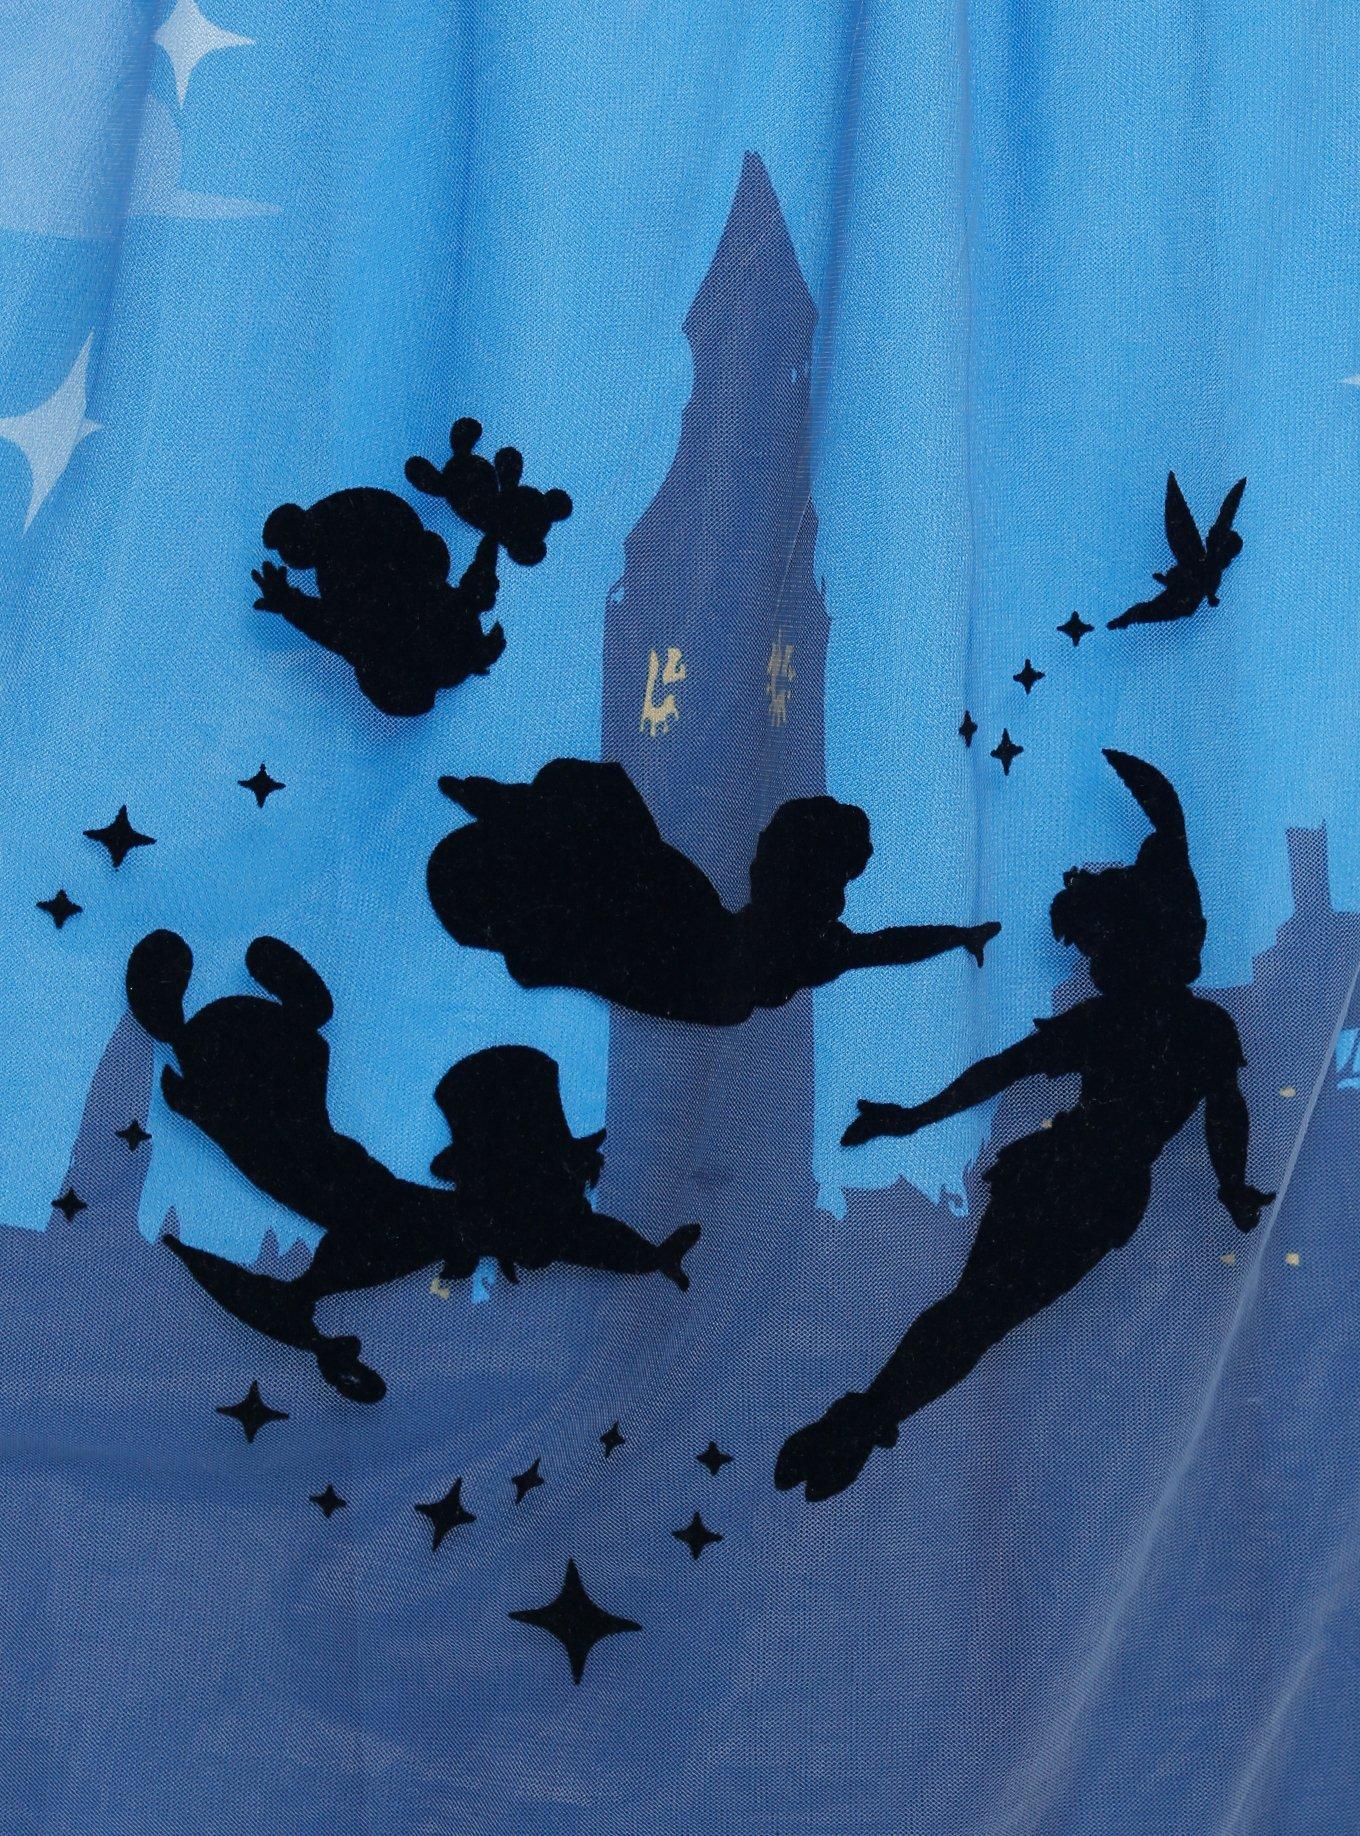 Disney Peter Pan Night Sky Lace-Up Skirt Plus Size, MULTI, alternate